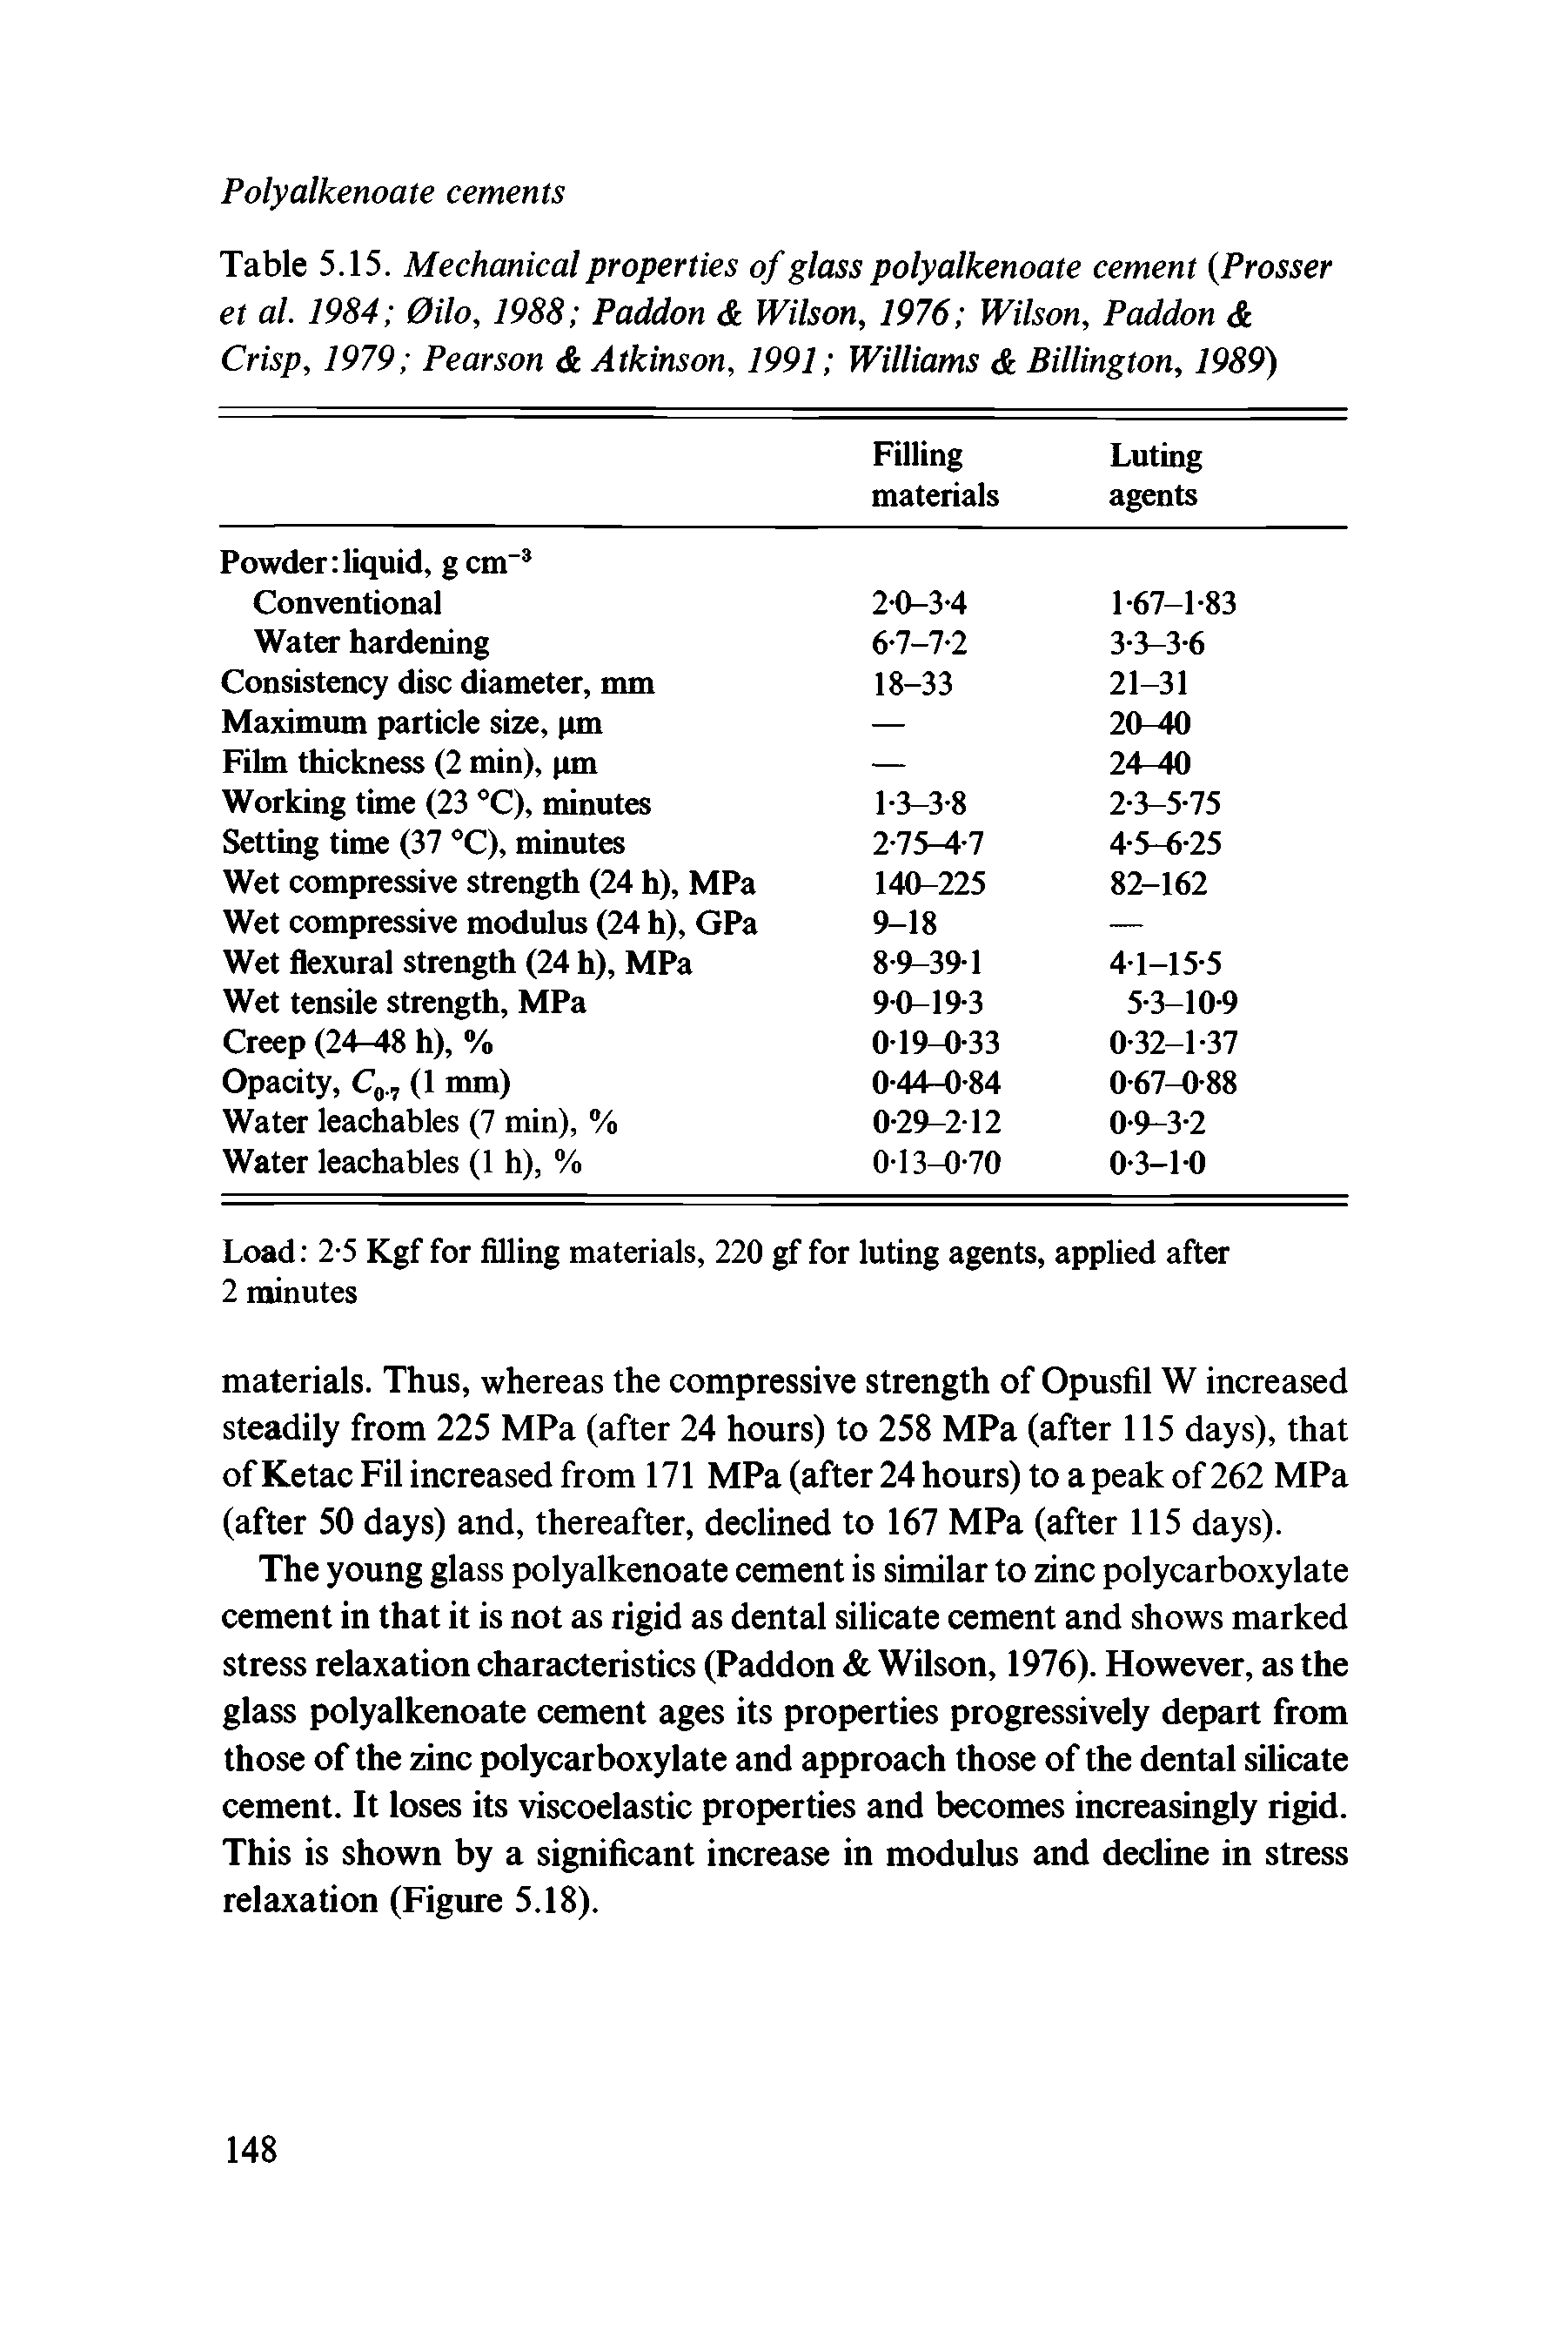 Table 5.15. Mechanical properties of glass polyalkenoate cement Prosser et al. 1984 0ilo, 1988 Paddon Wilson, 1976 Wilson, Paddon Crisp, 1979 Pearson Atkinson, 1991 Williams Billington, 1989)...